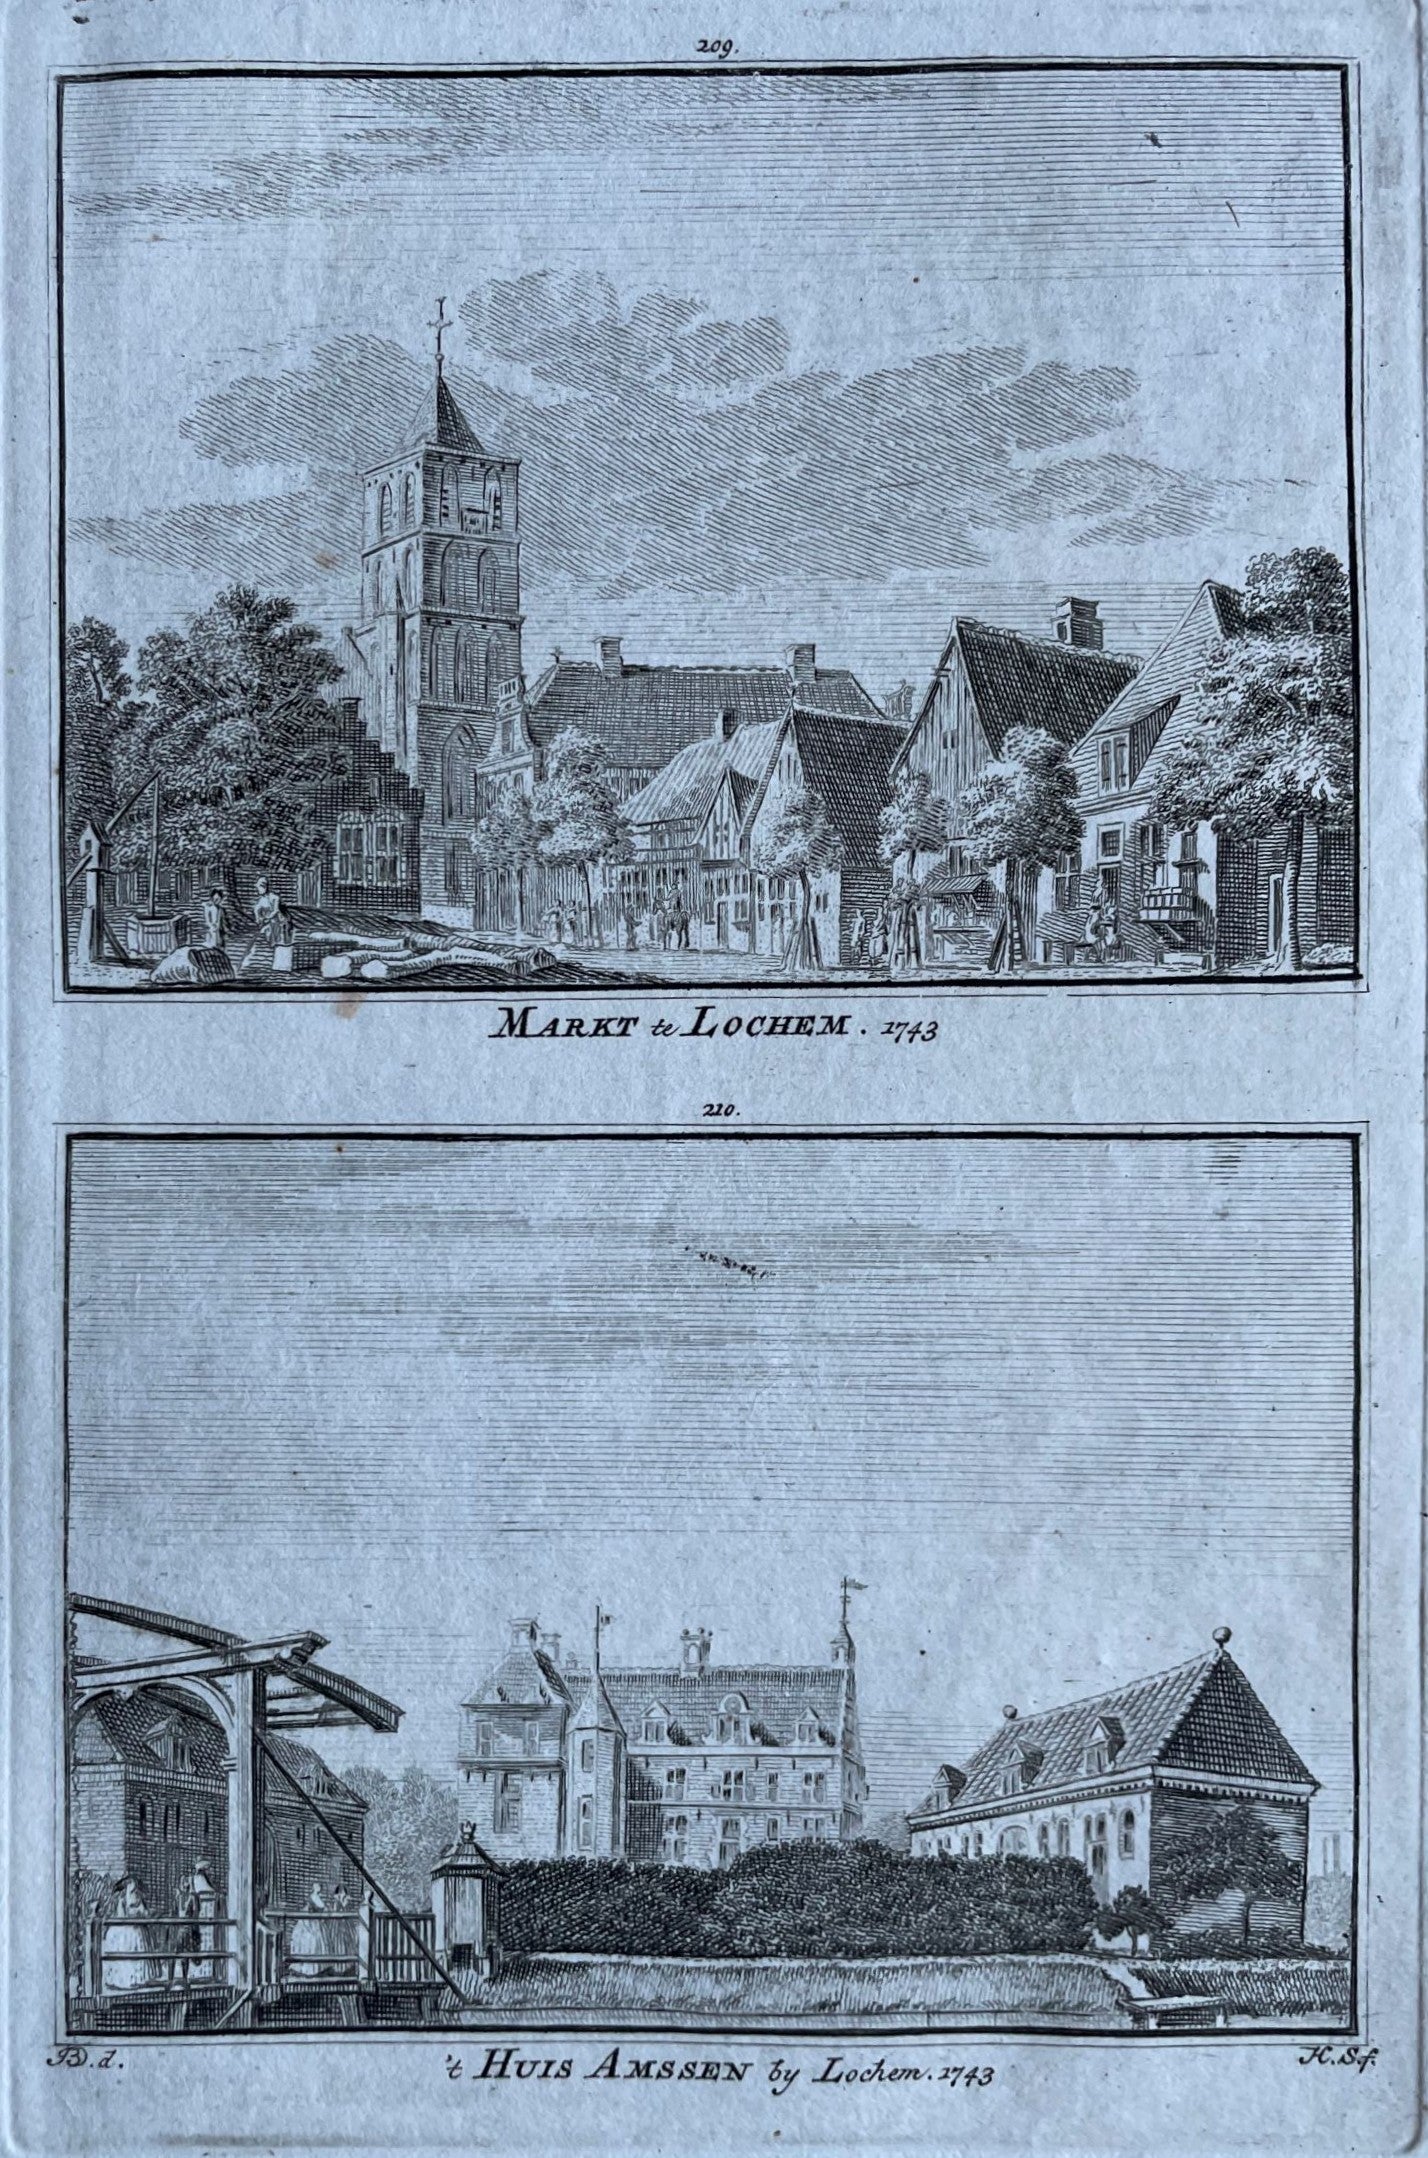 Lochem Markt en 't Huis Amssen - H Spilman - ca. 1750